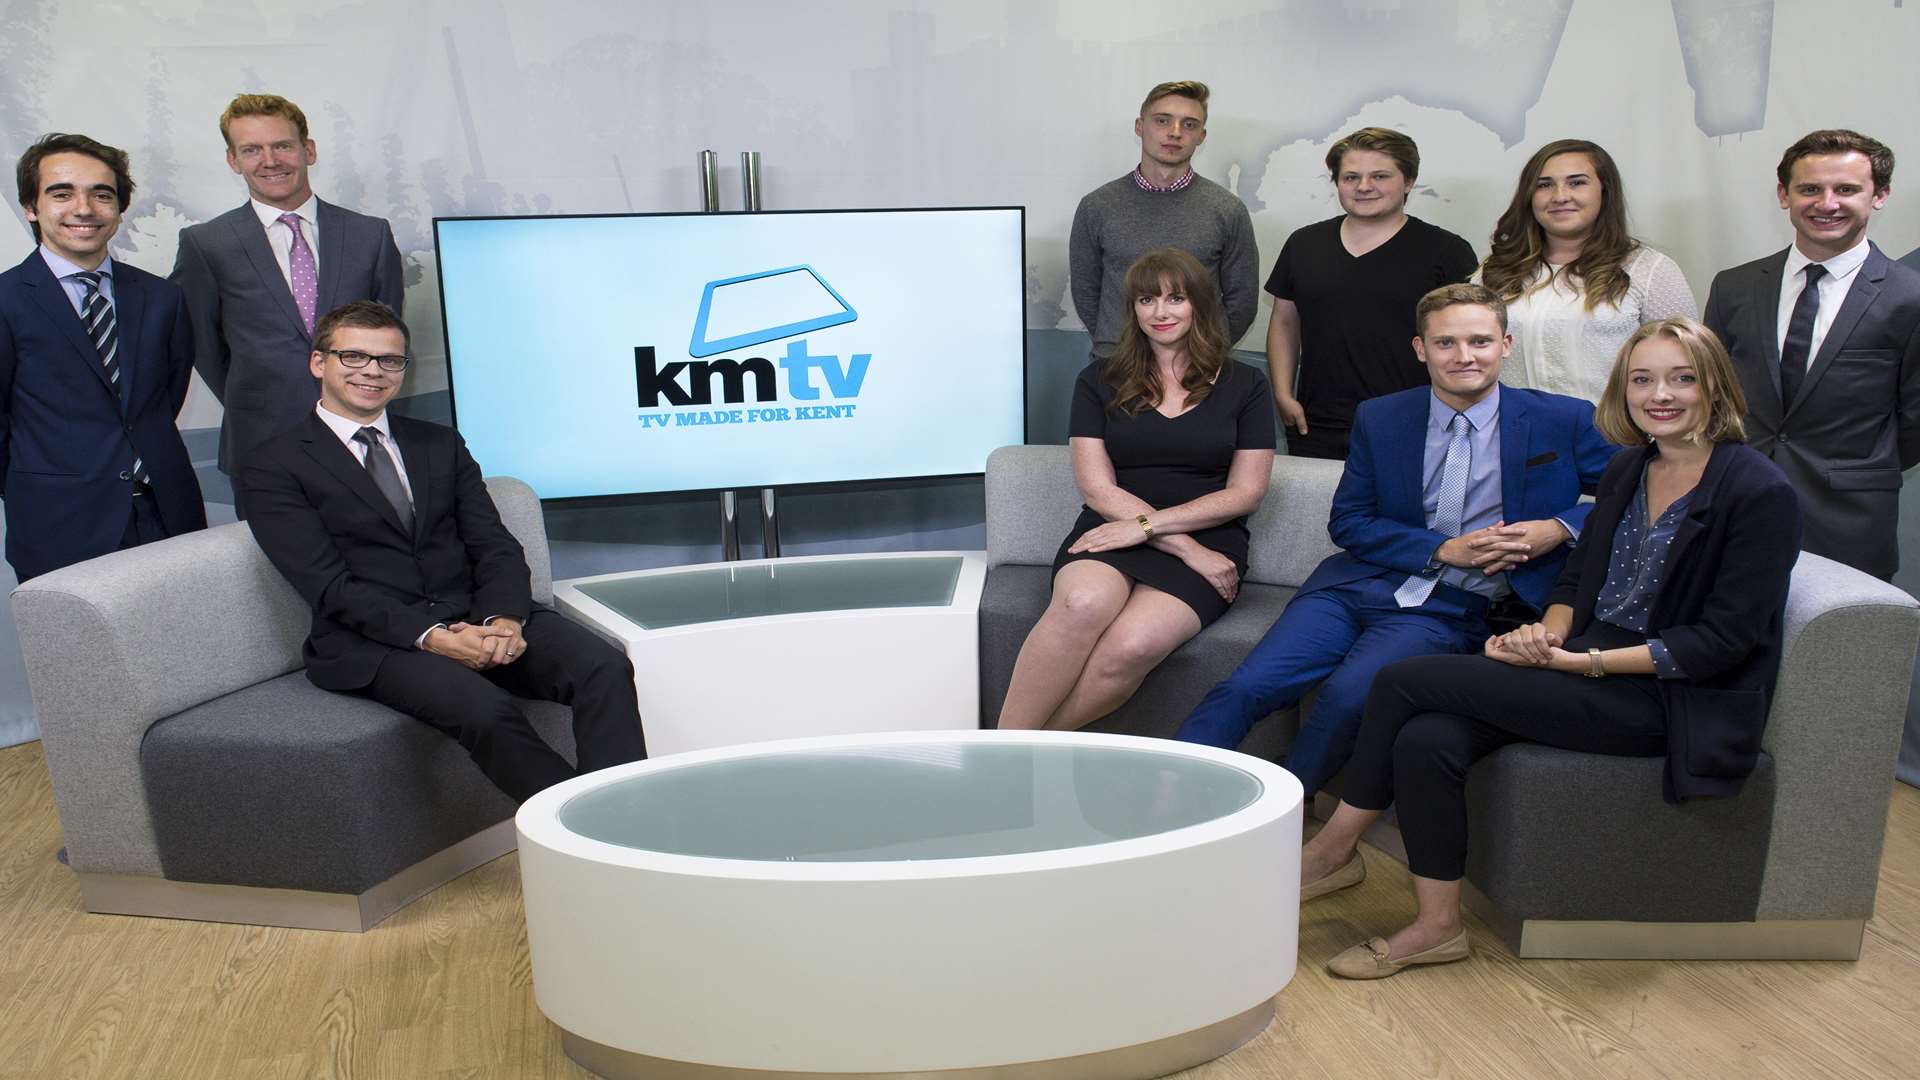 The KMTV team